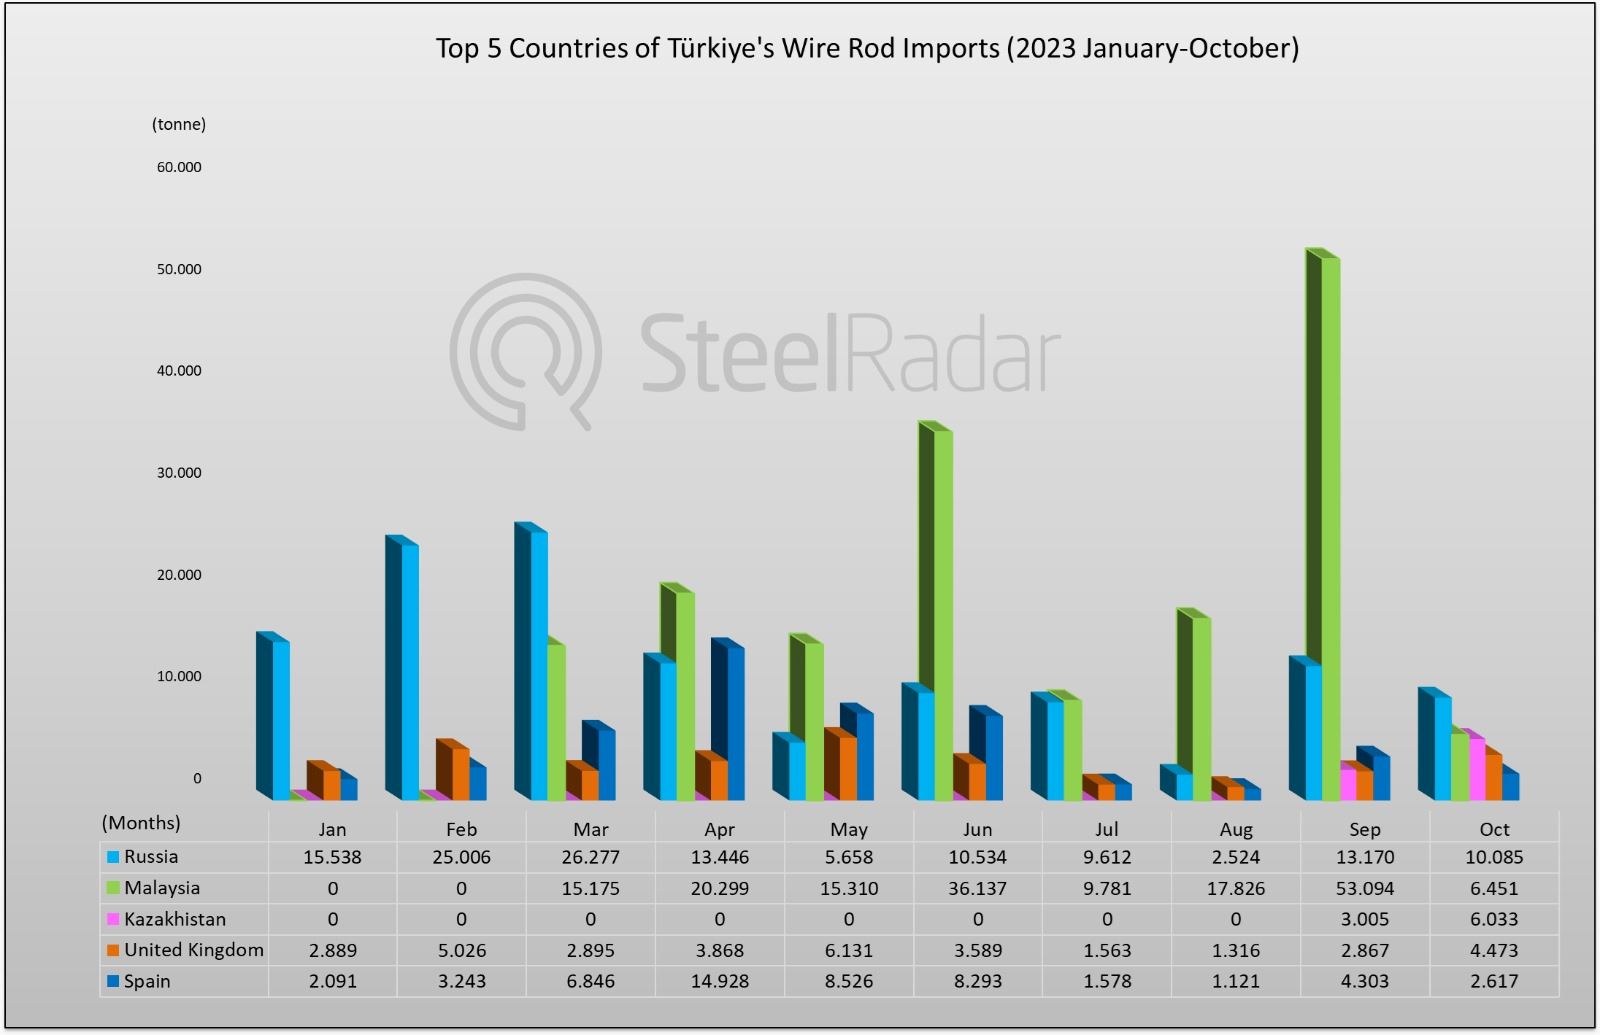 Türkiye's wire rod imports fell sharply